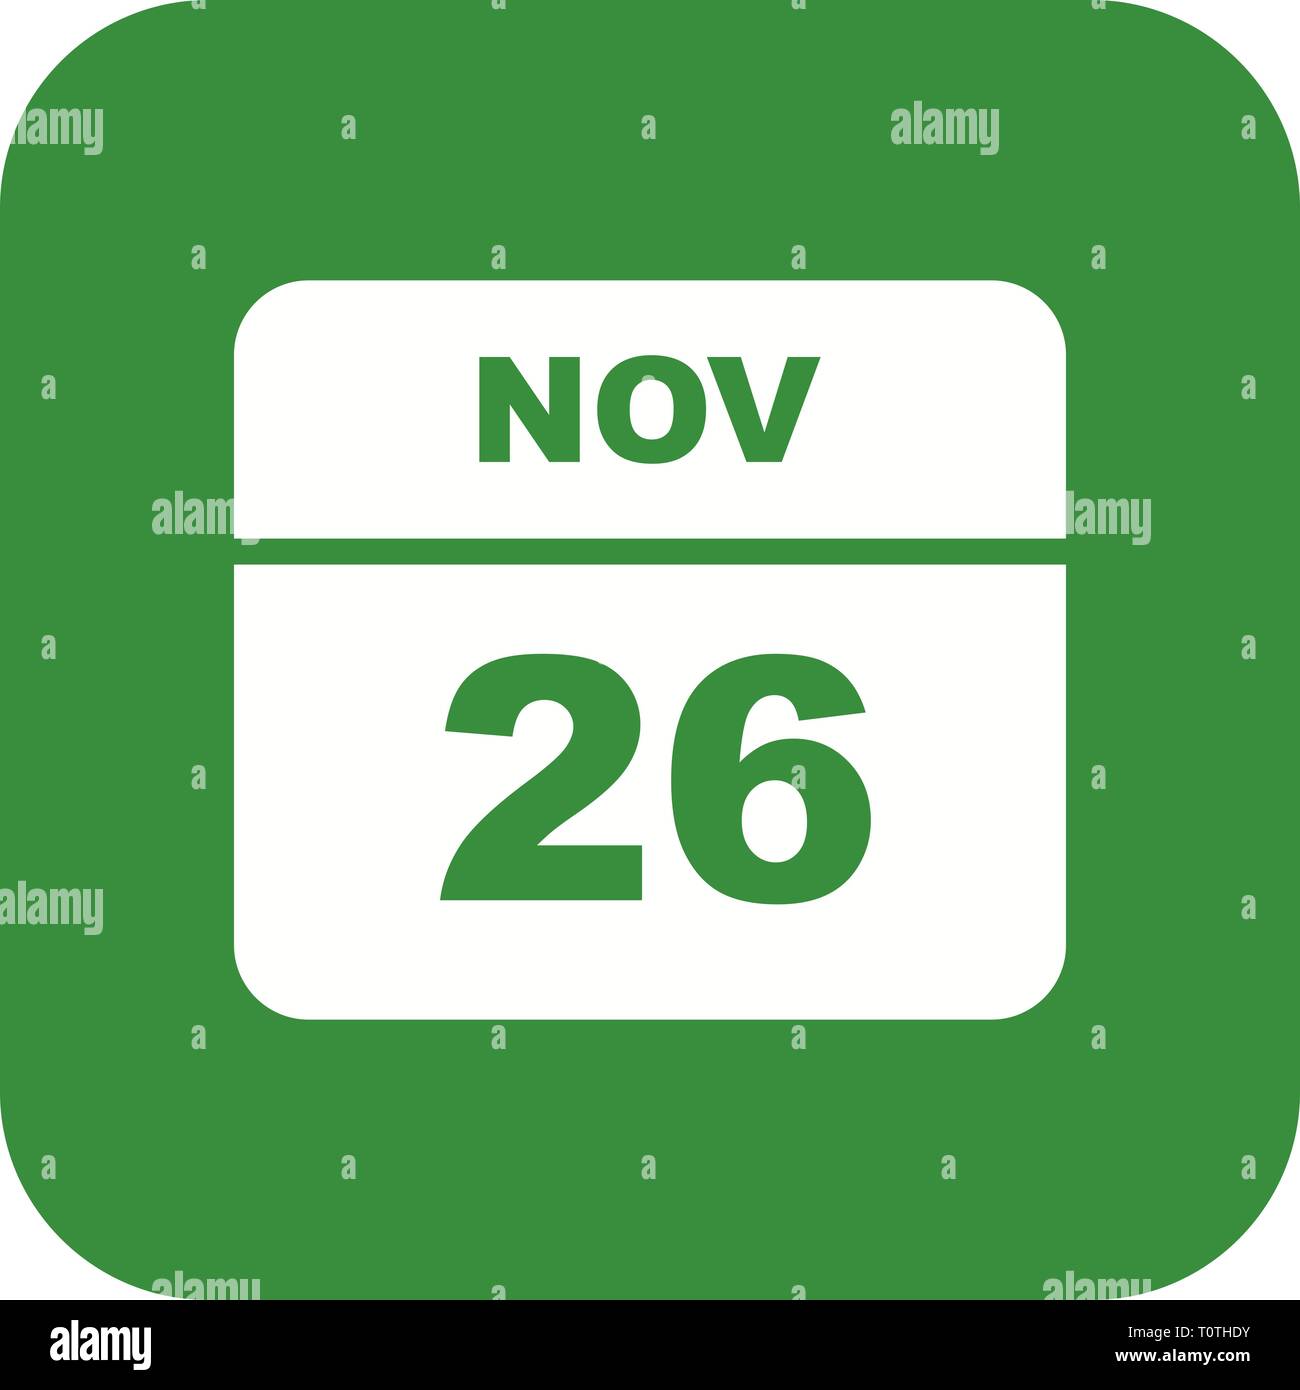 November 26th Date on a Single Day Calendar Stock Photo Alamy